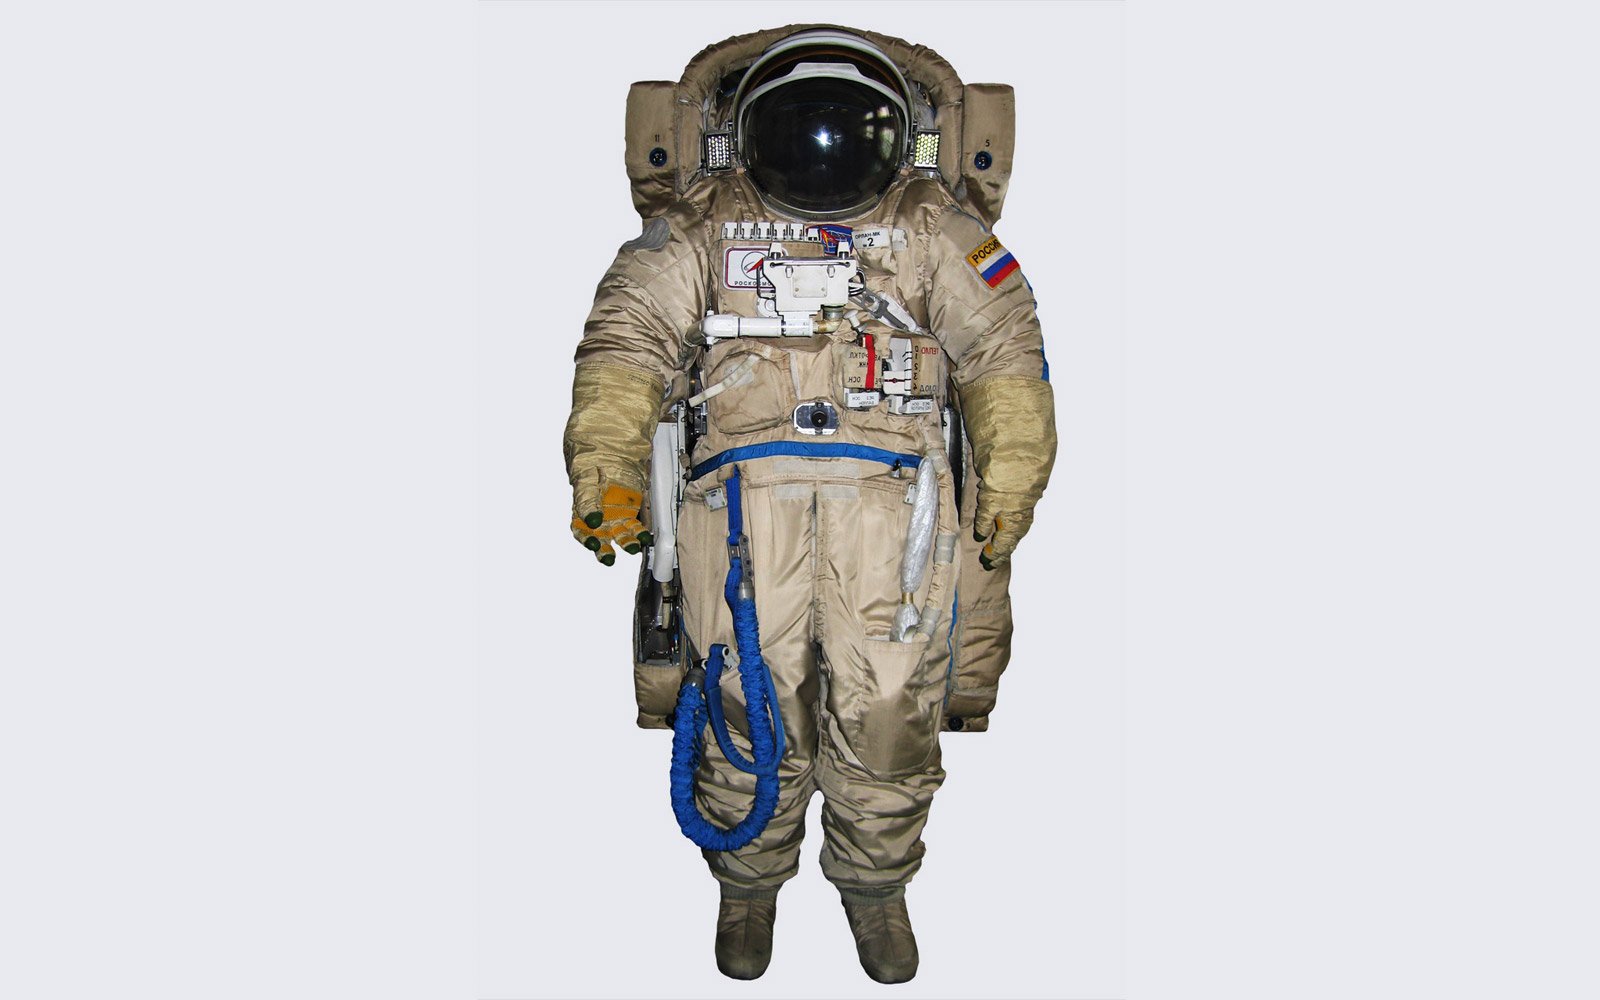 Специальные скафандры. Скафандр Космонавта Орлан. Орлан костюм Космонавта. Скафандр Орлан м. Костюм для скафандр Орлан МКС.